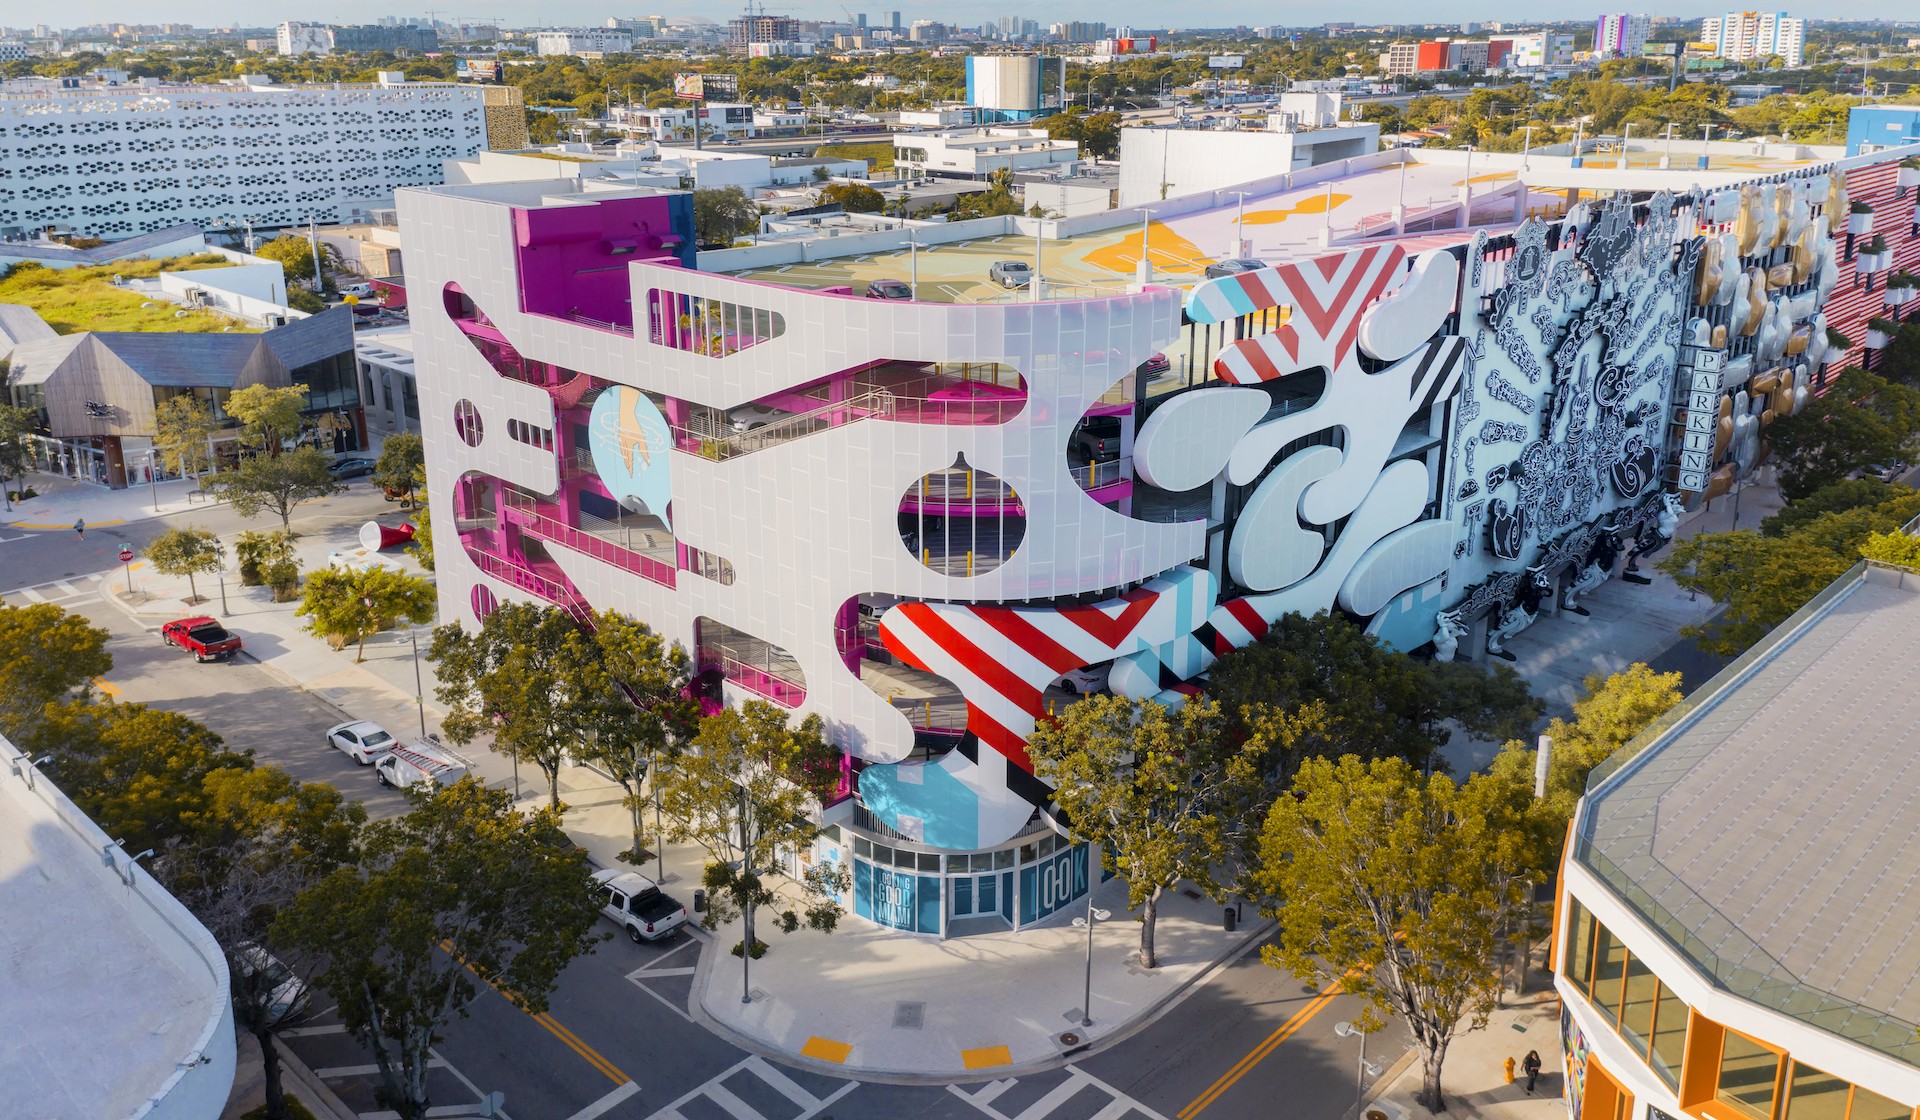 Miami Museum Garage / WORKac + Nicolas Buffe + Clavel Arquitectos